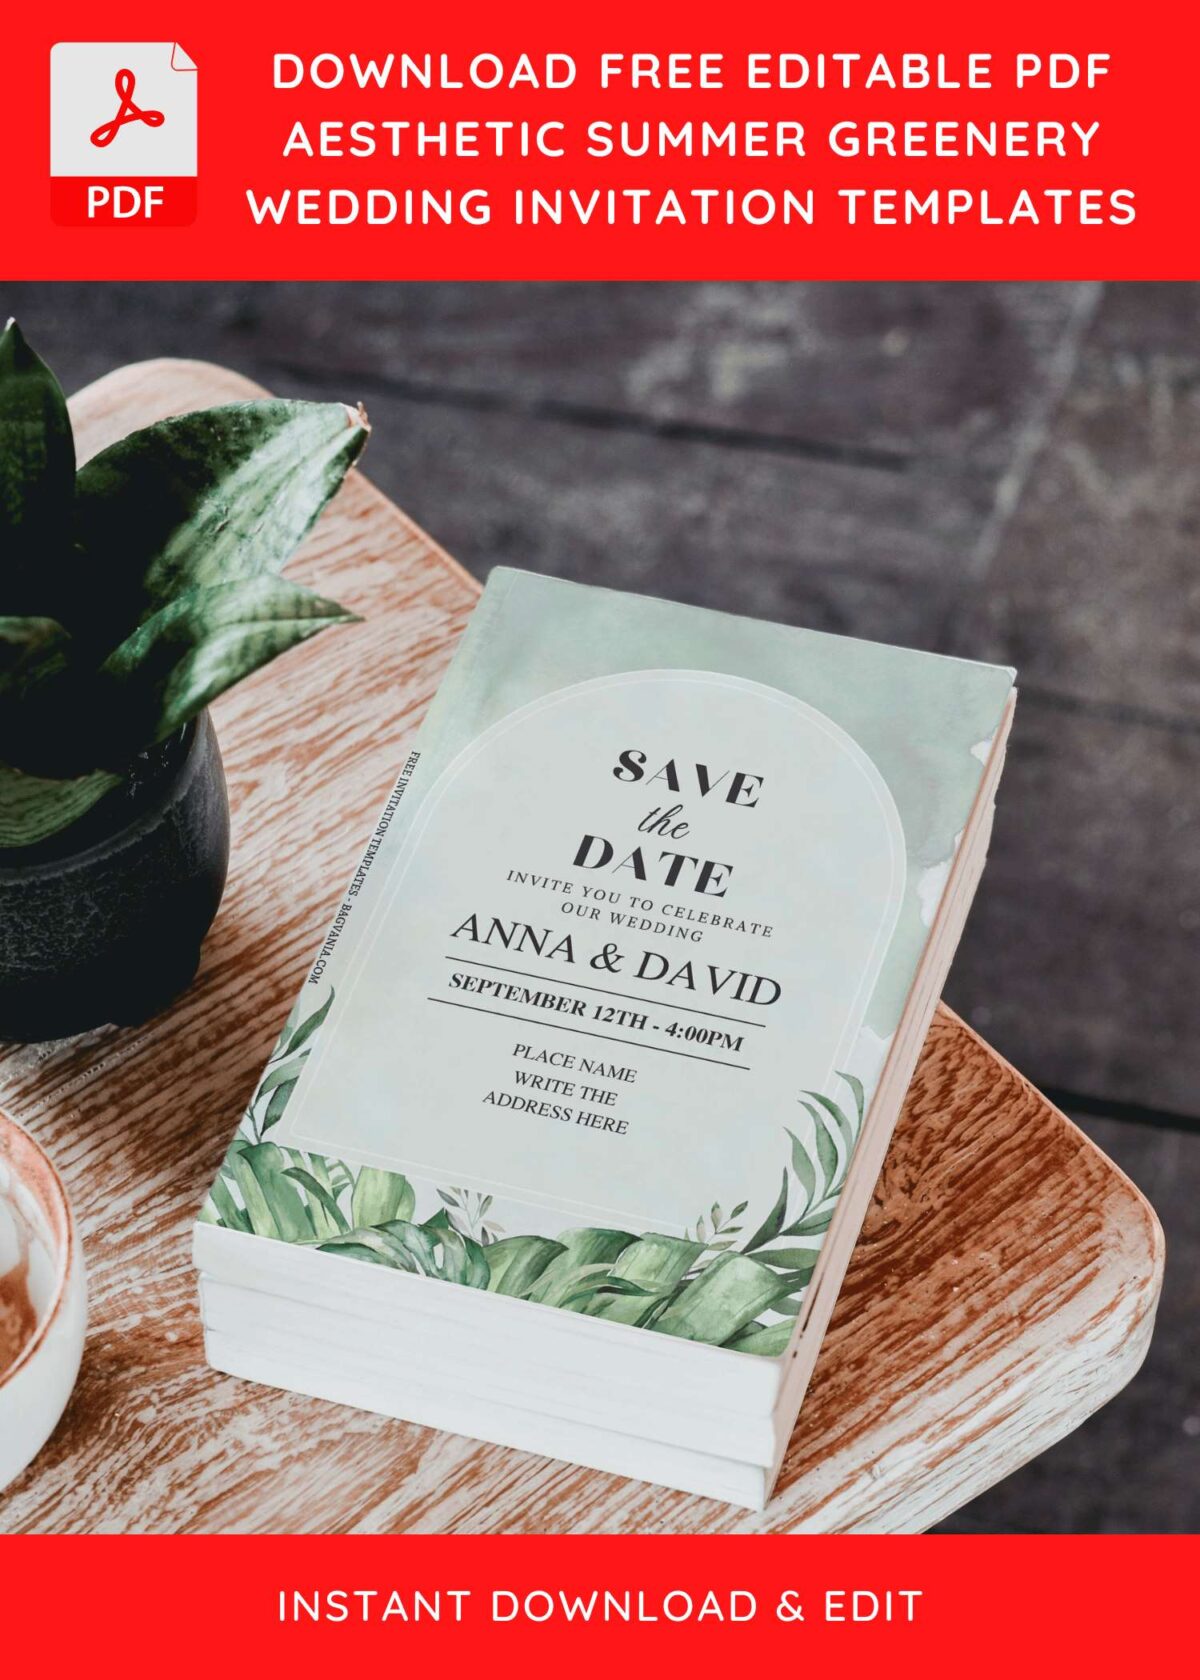 (Free Editable PDF) Classy Greenhouse Greenery Wedding Invitation Templates D